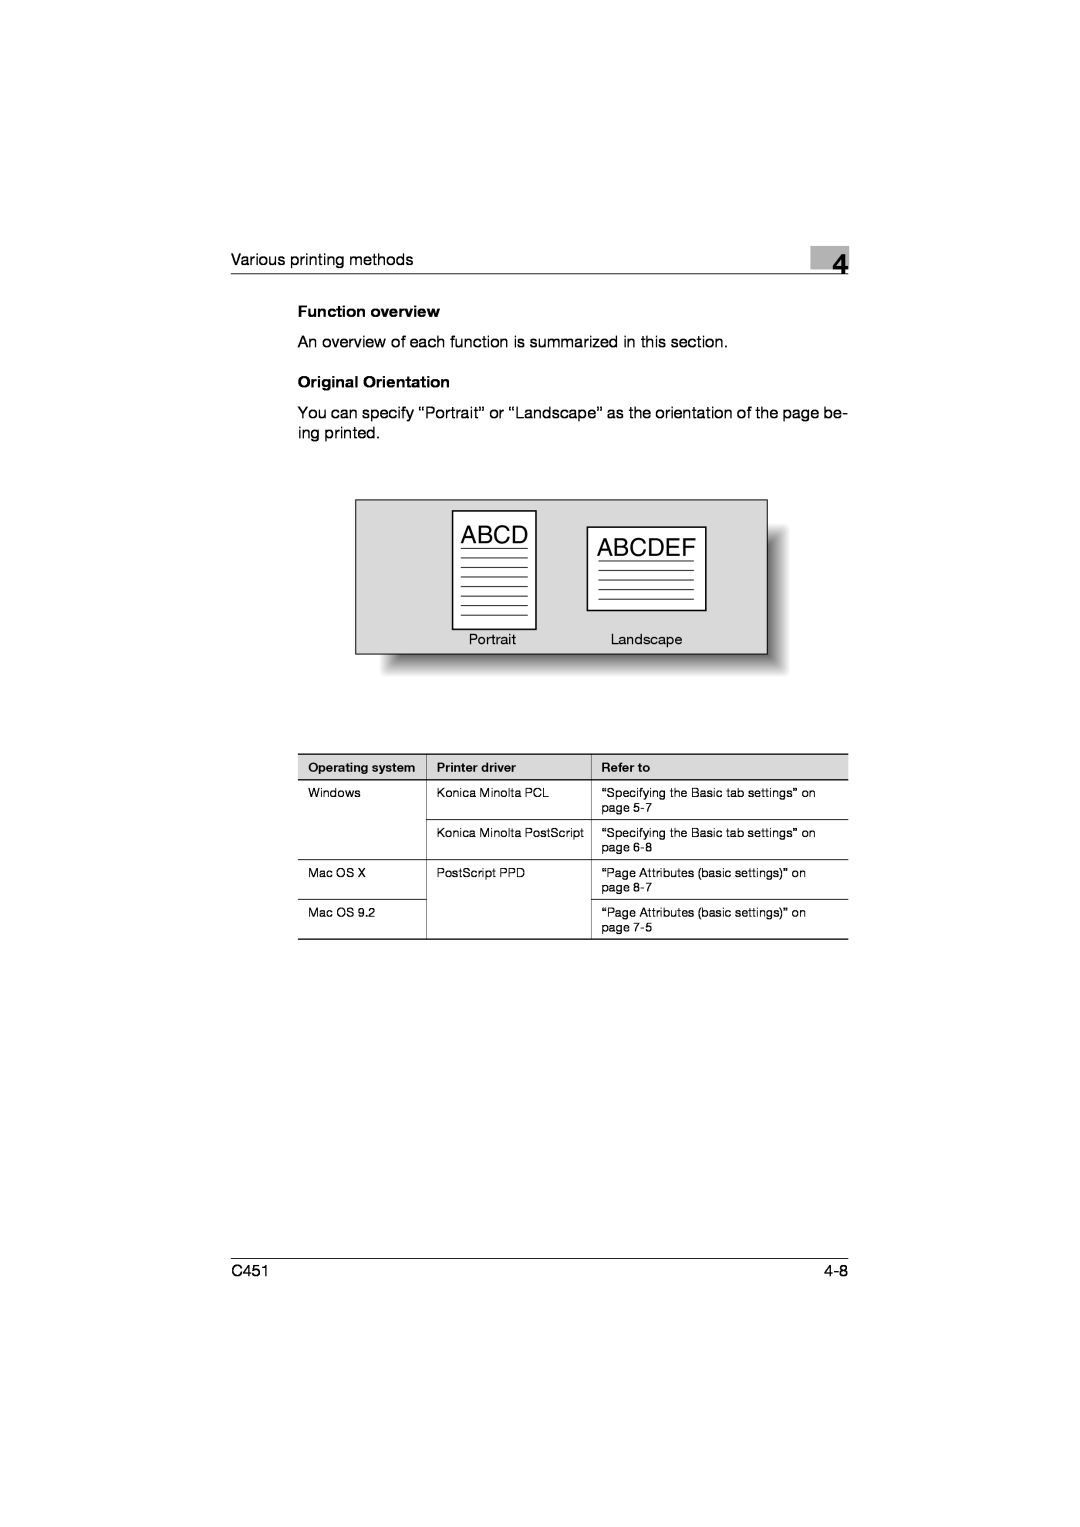 Konica Minolta C451 manual Abcdef, Function overview, Original Orientation, PortraitLandscape 